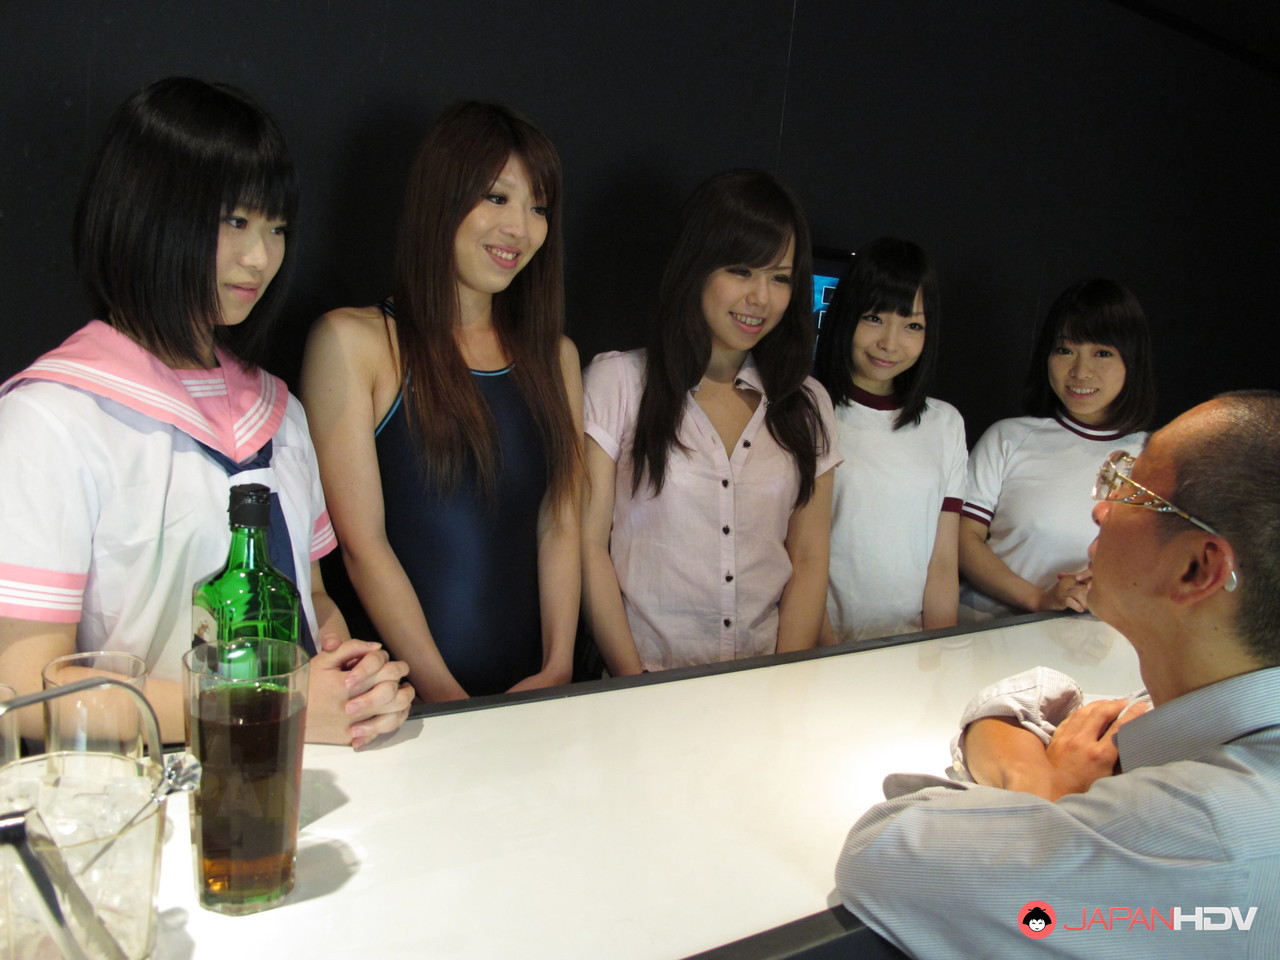 Cute Japanese teens participate in a wild Asian orgy in the nightclub porn photo #424451908 | Japan HDV Pics, Mio Kosaki, Seiko Ida, Yuri Sakura, Japanese, mobile porn